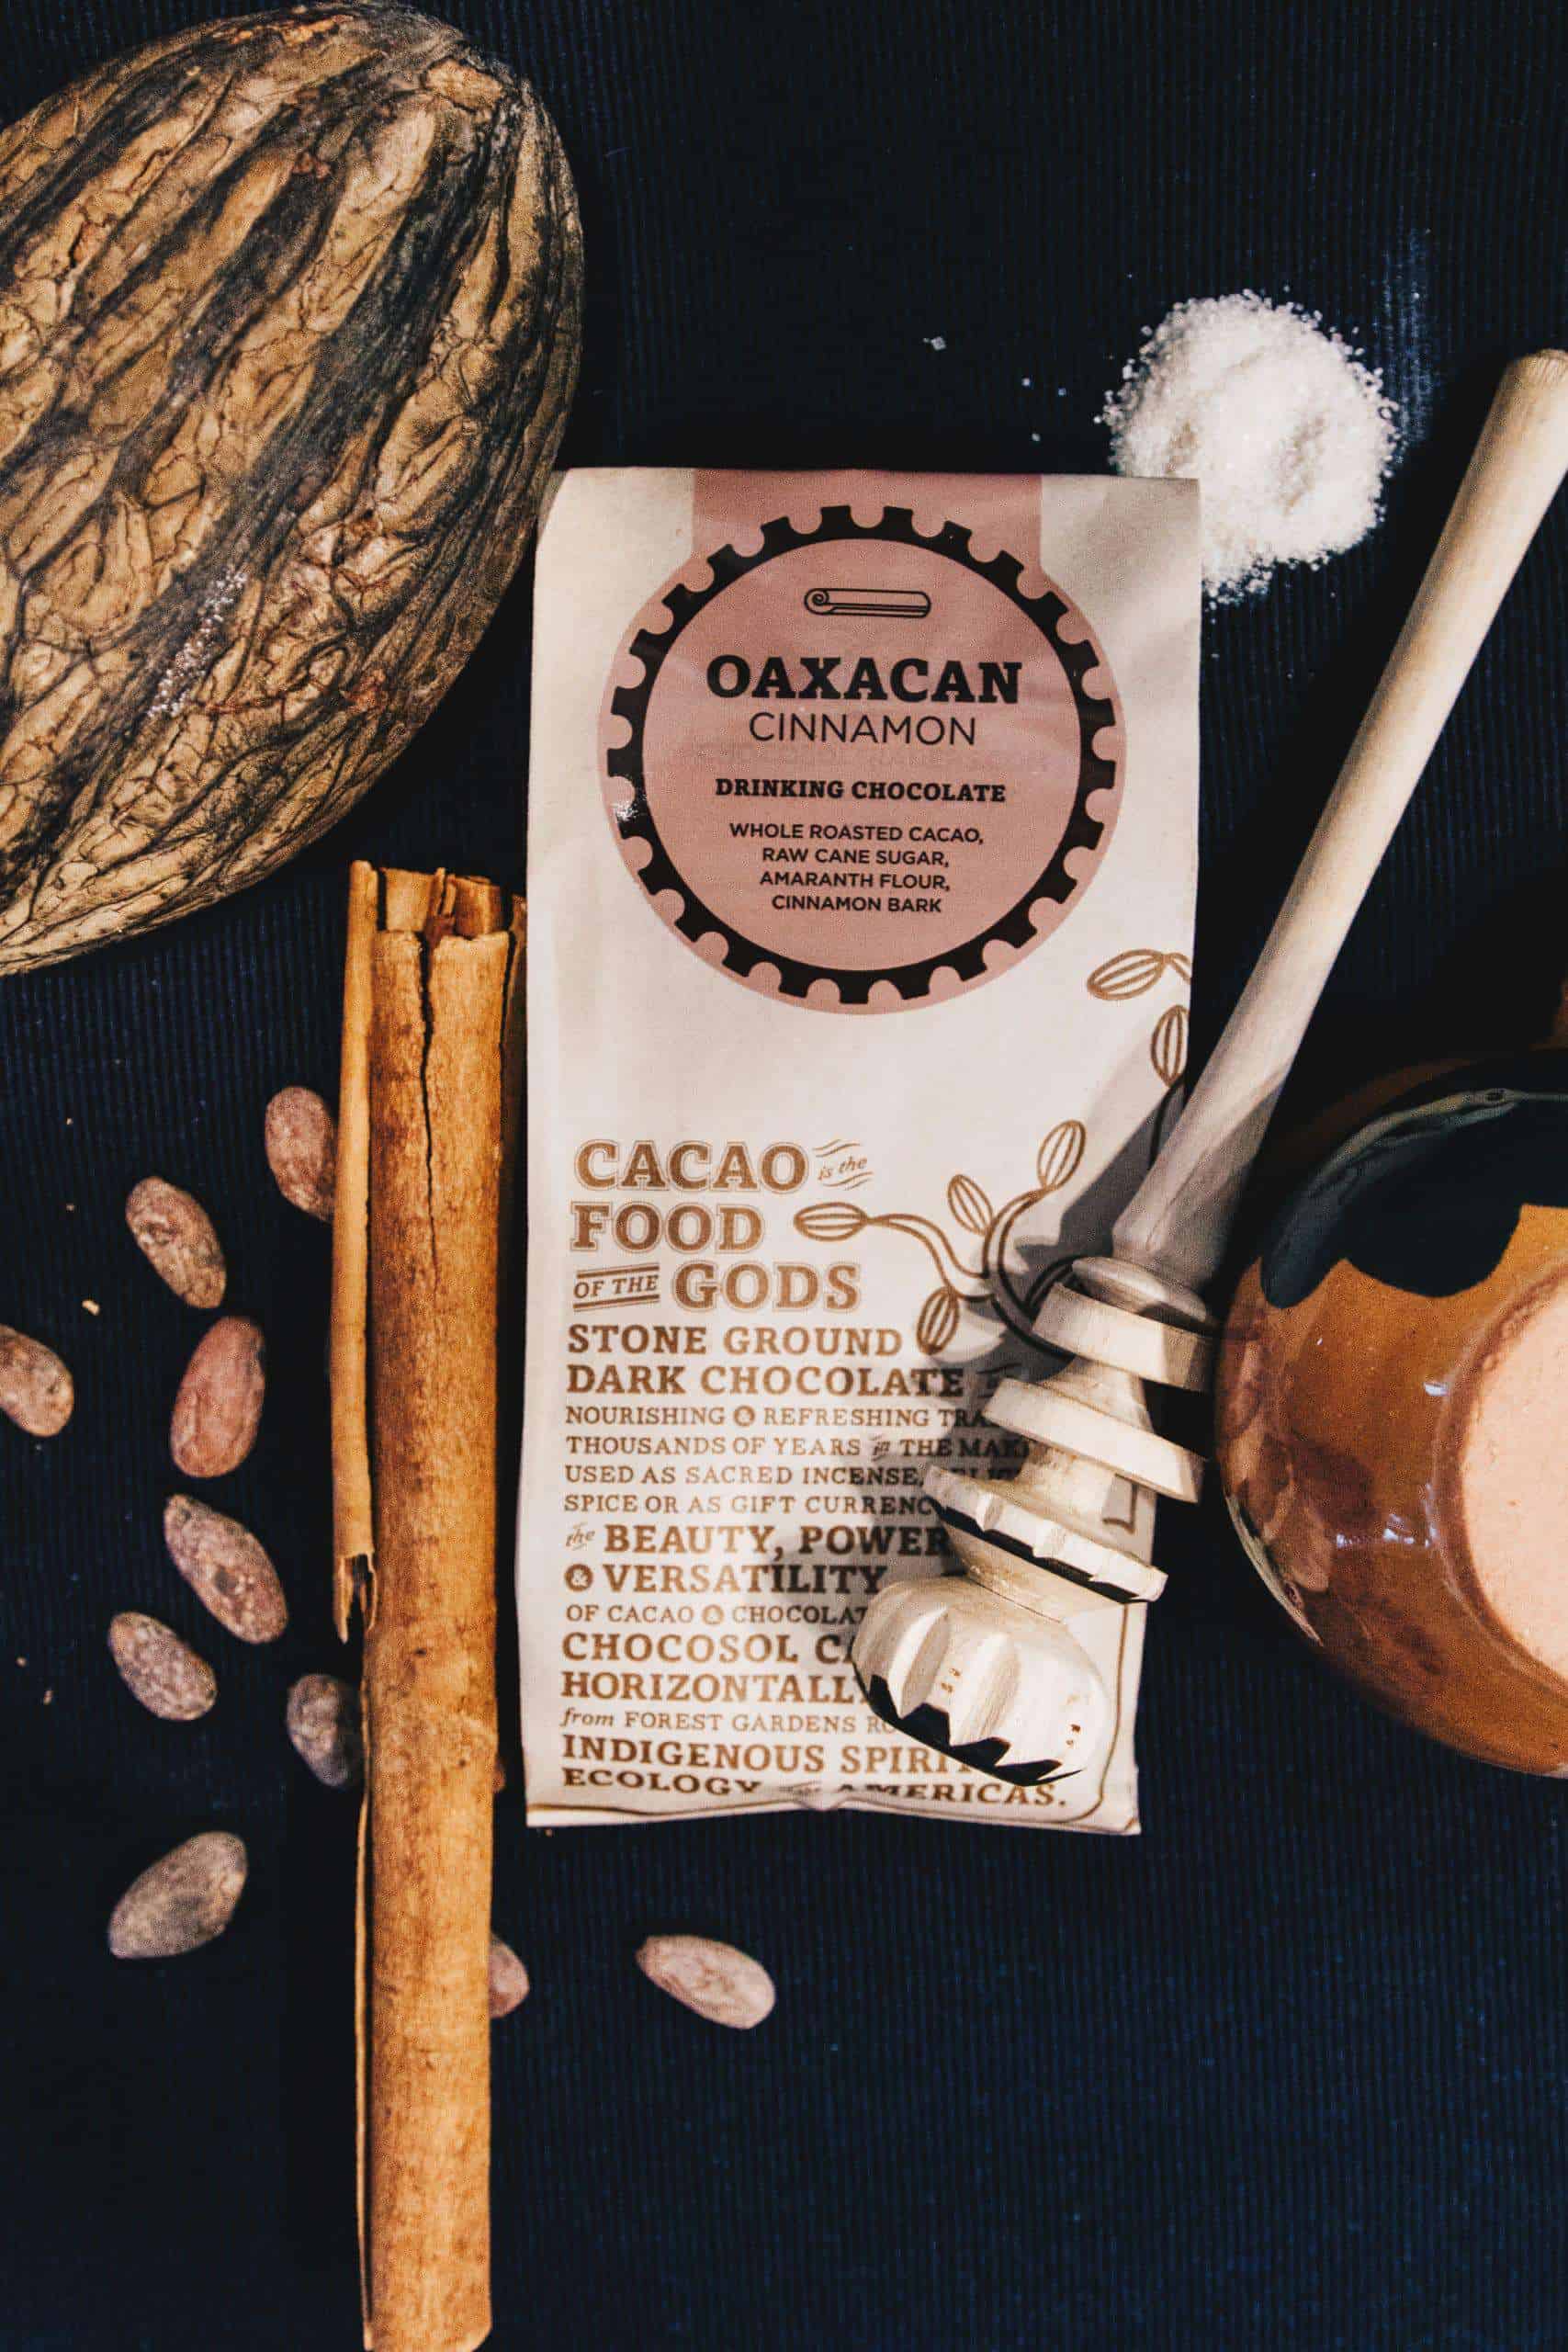 Oaxacan cinnamon drinking chocolate